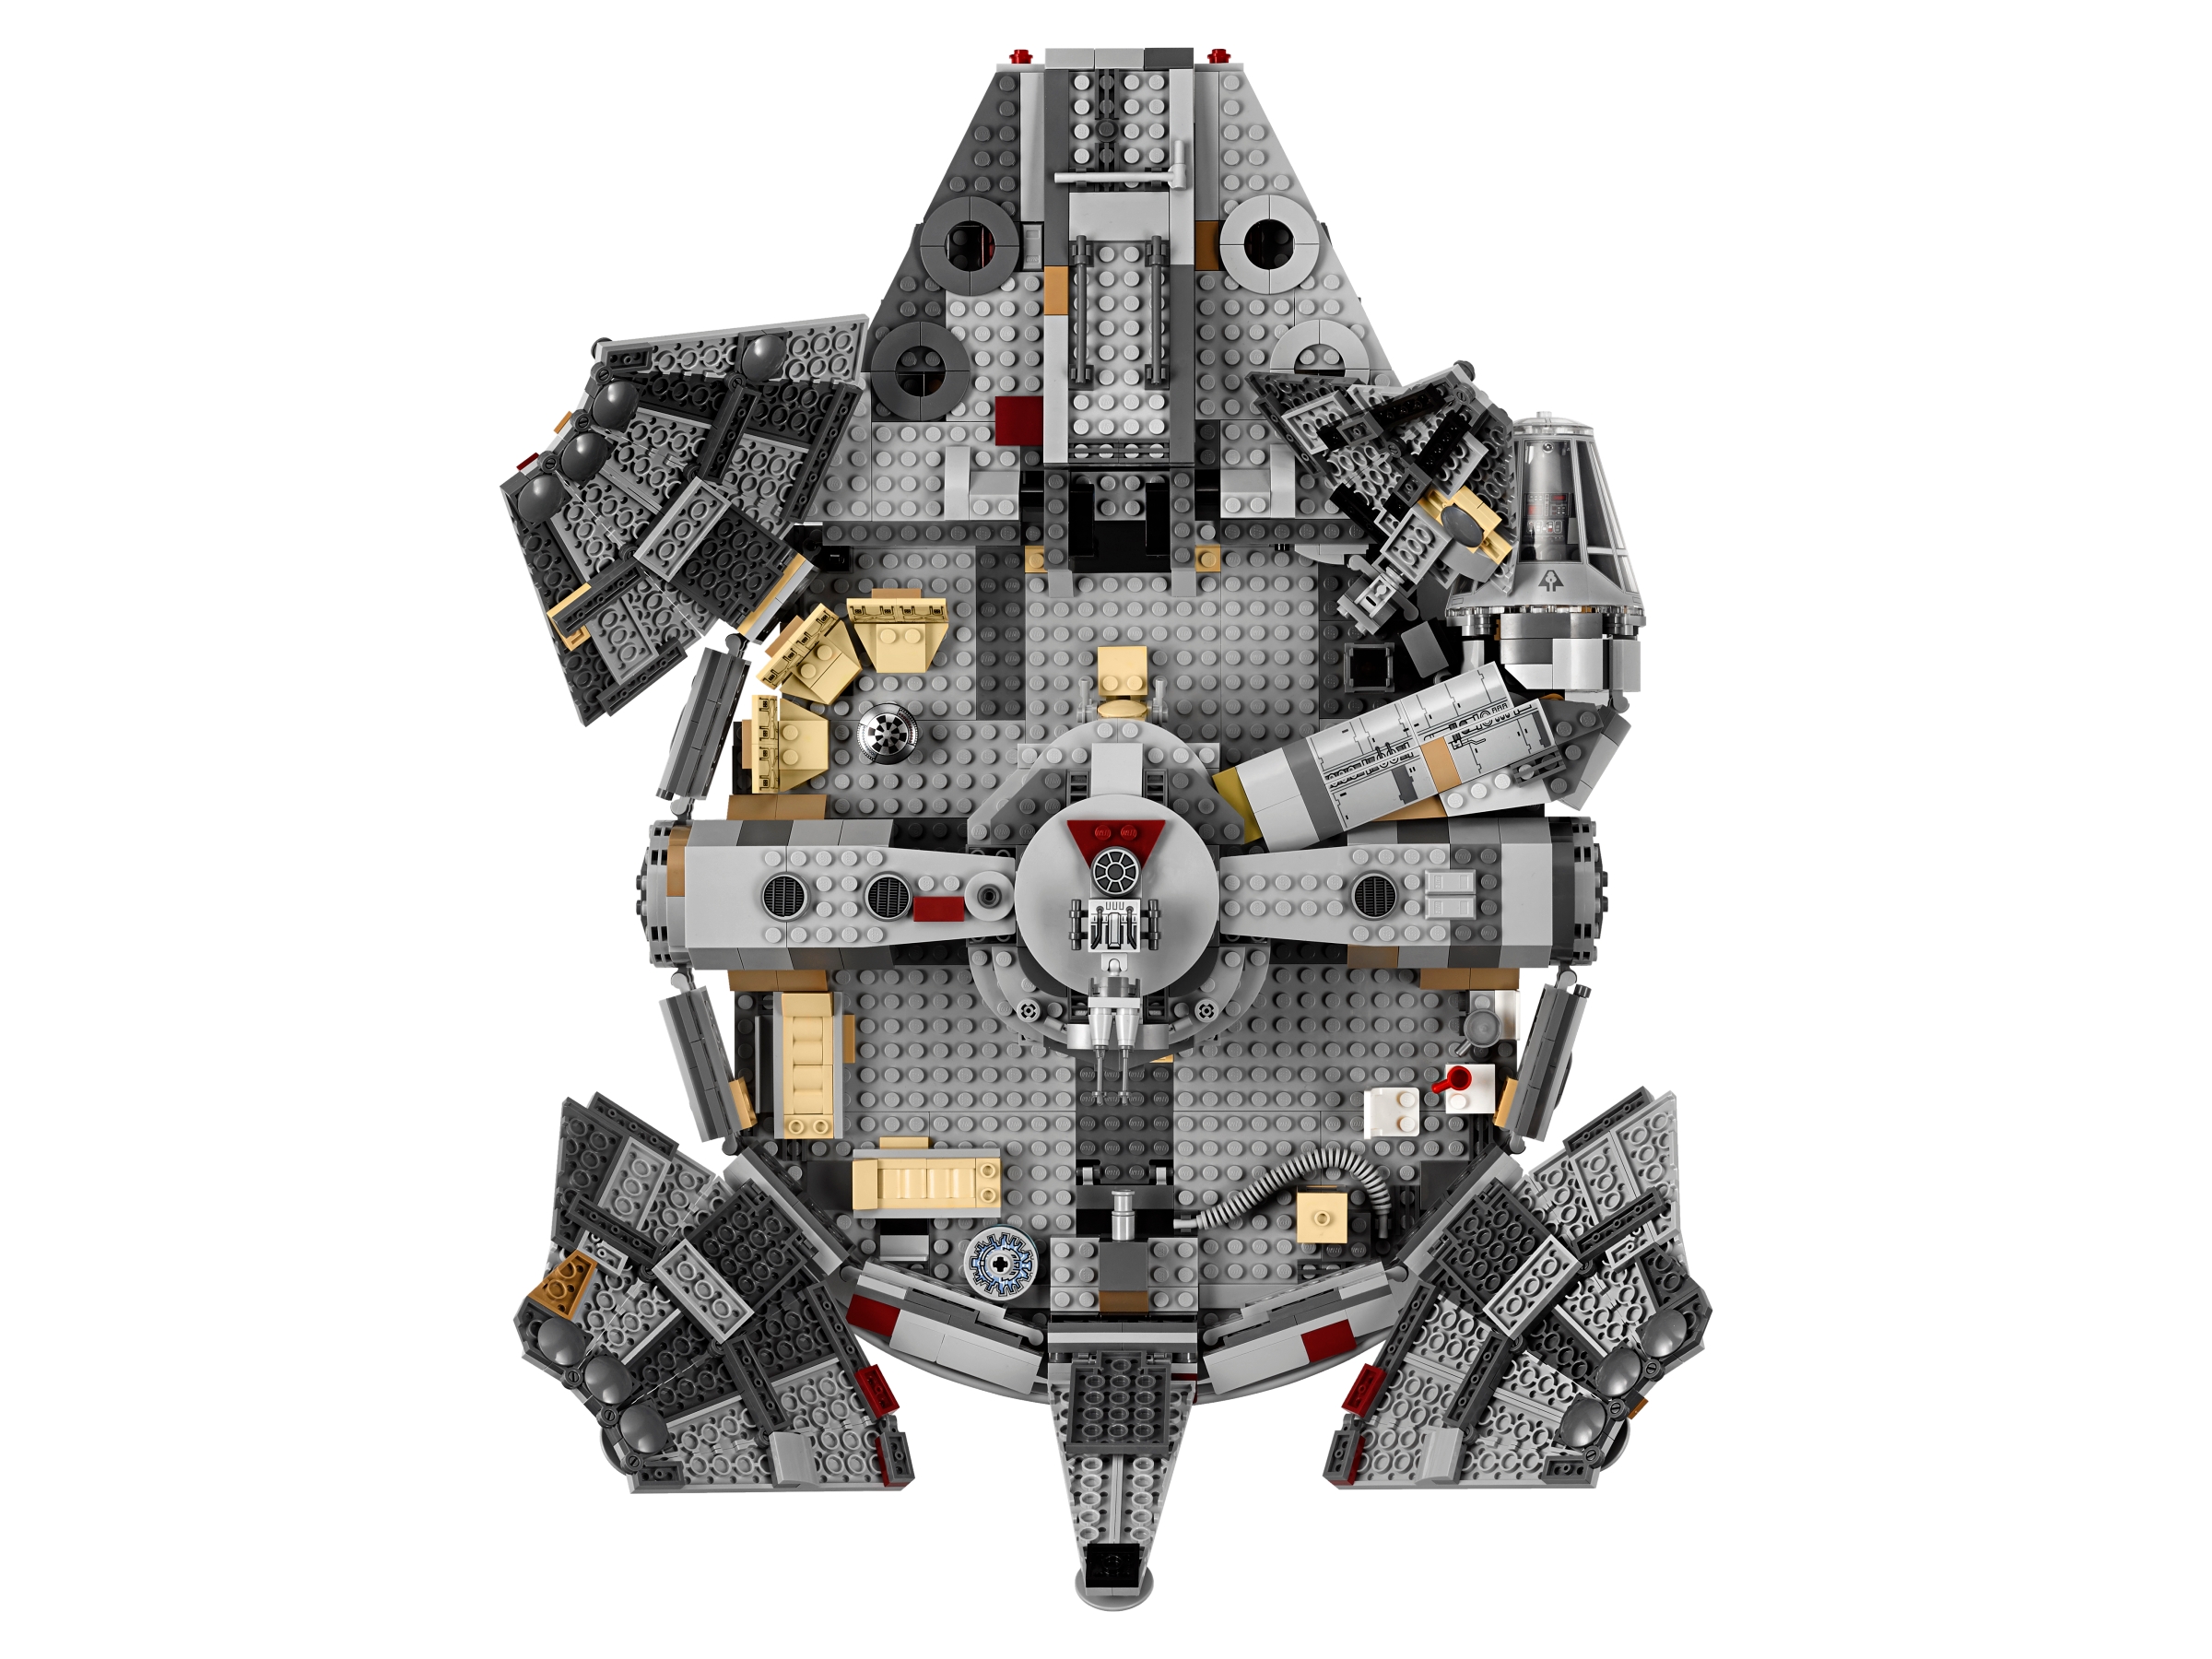 LEGO Star Wars 2019 Millennium Falcon Review - 75257 